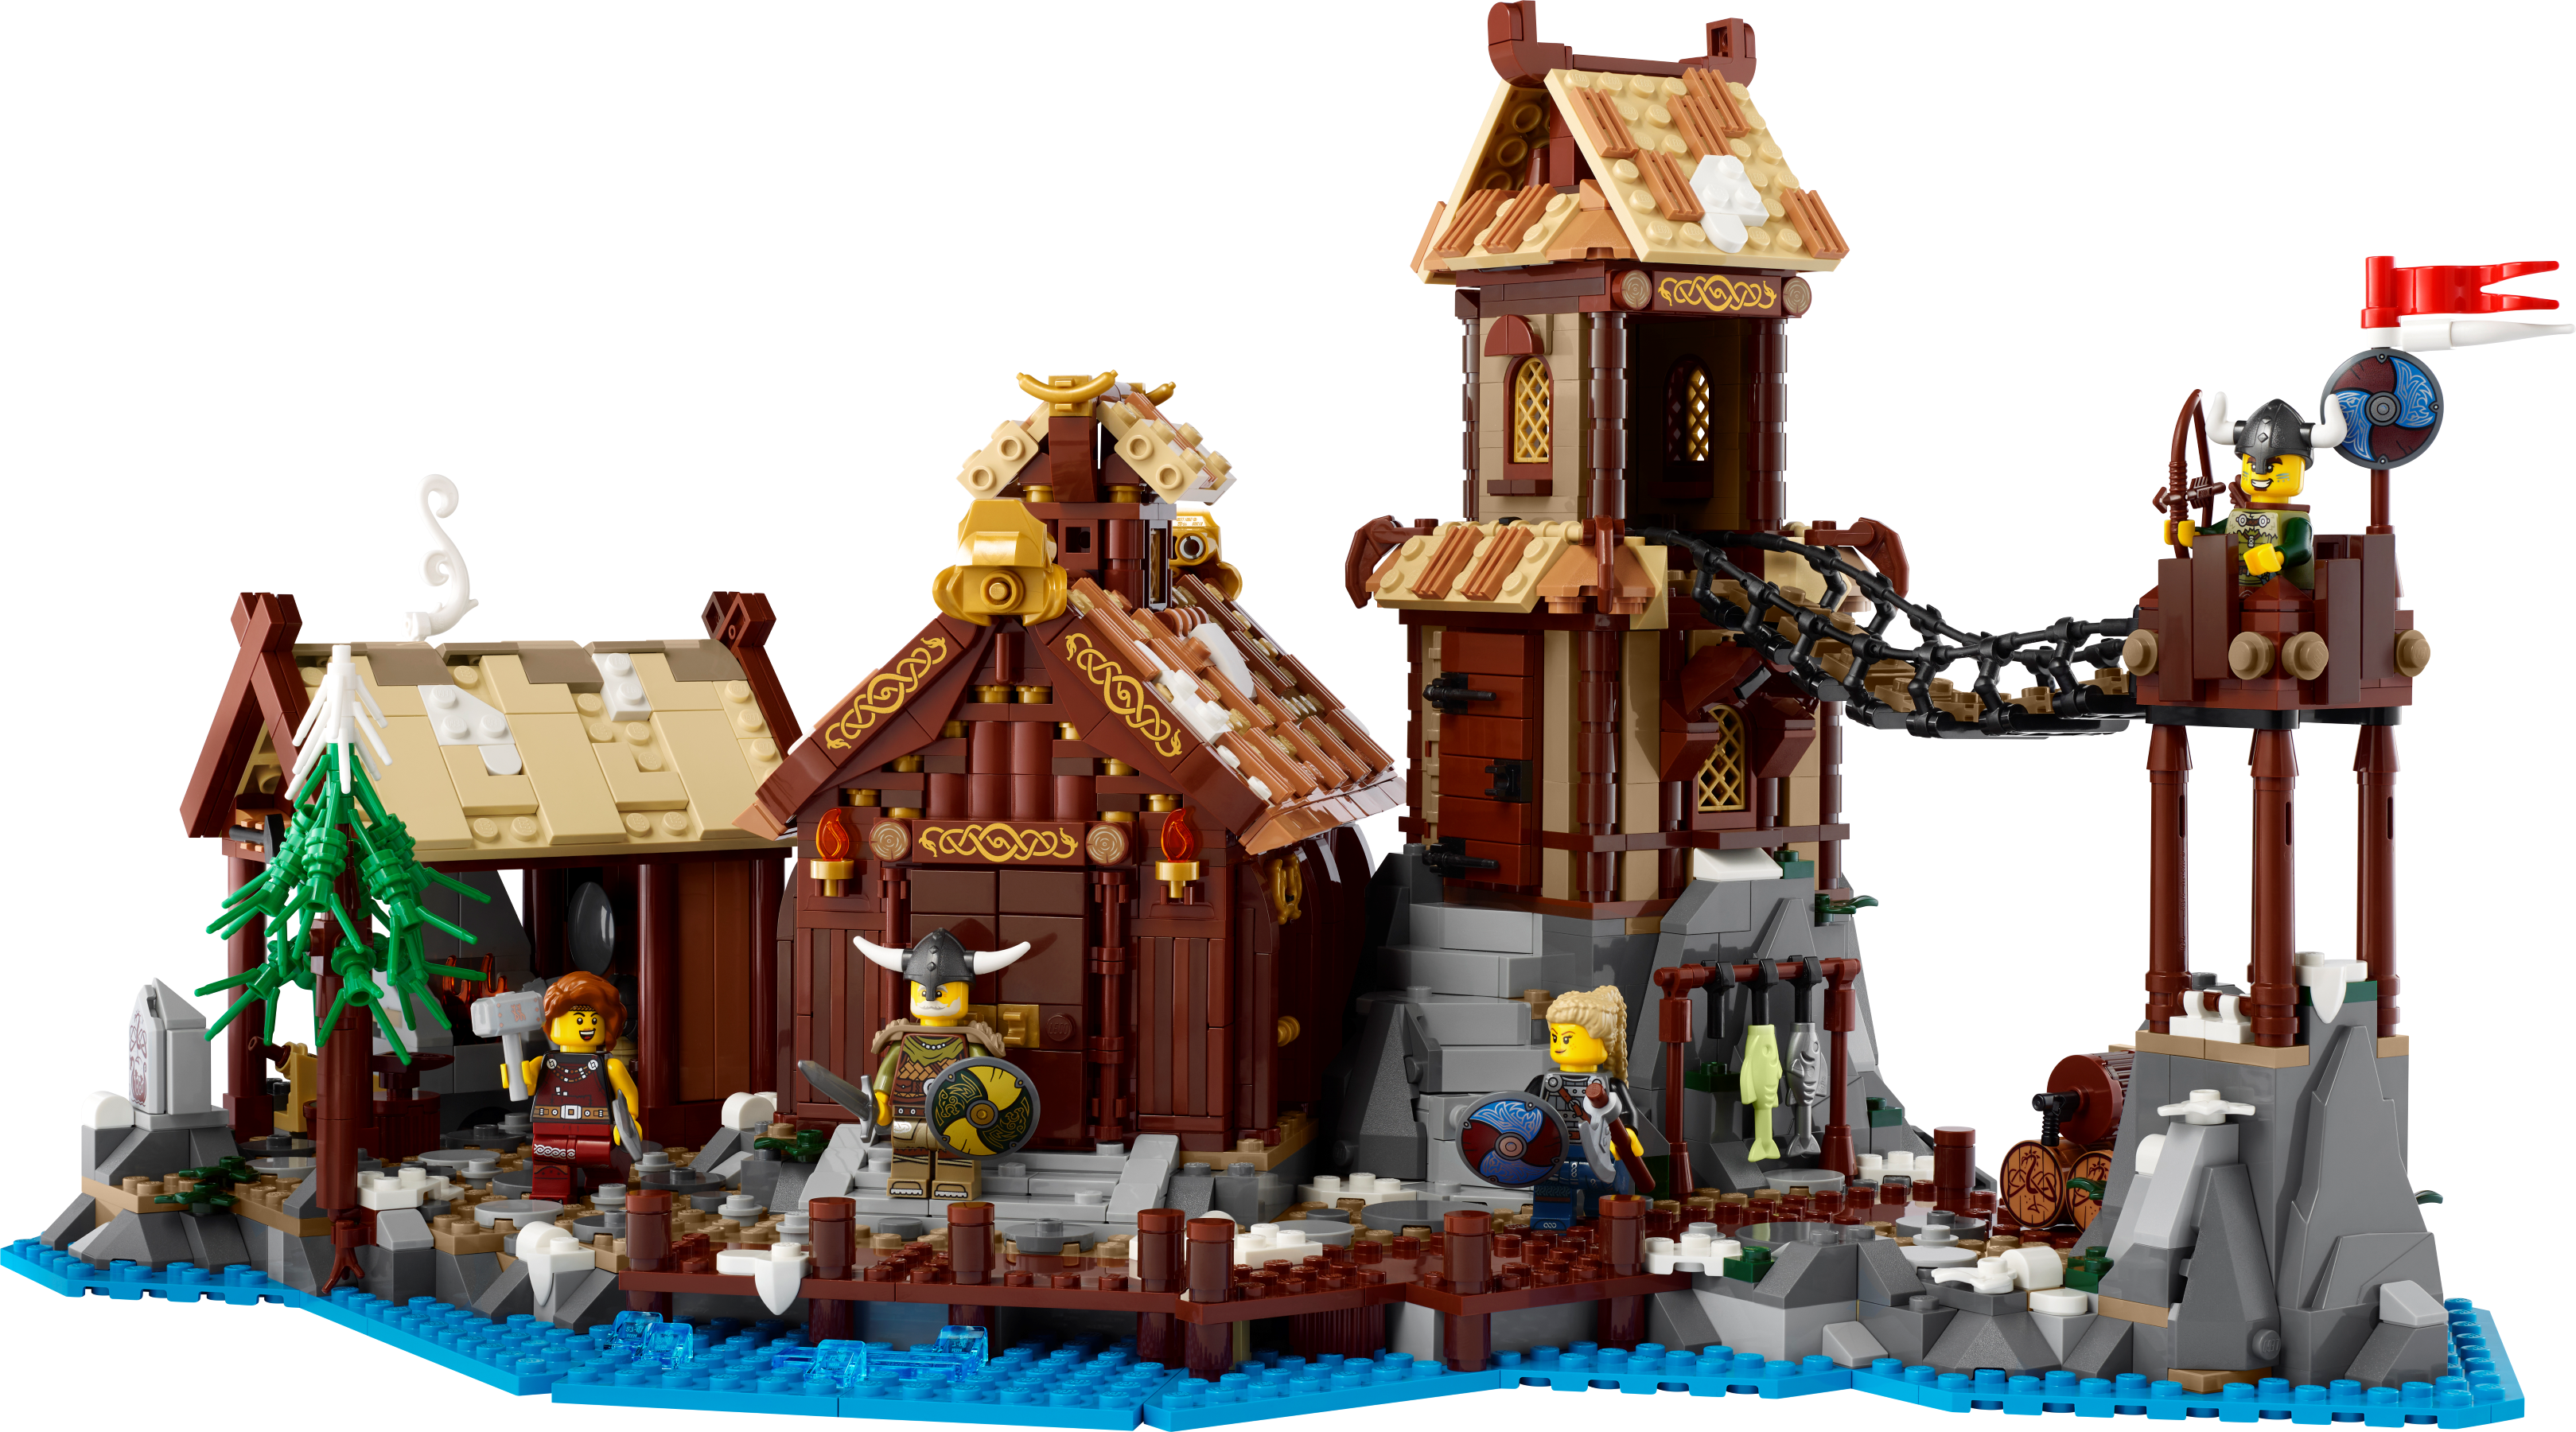 Building a Lego Medieval Village: Volume One